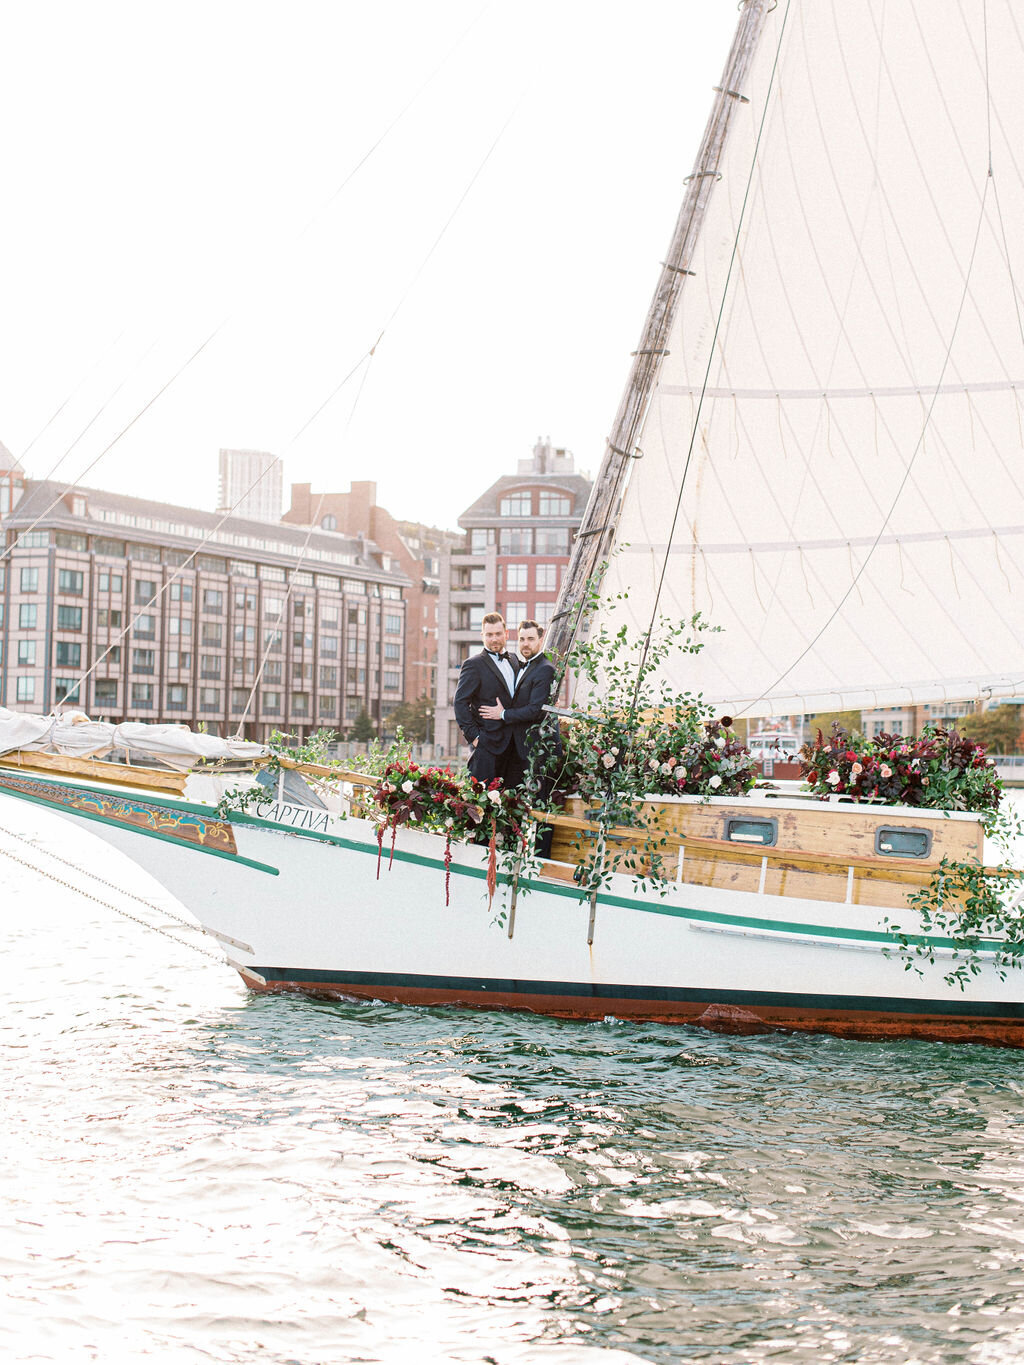 Kate-Murtaugh-Events-Boston-Harbor-sail-boat-yacht-elopement-wedding-planner-moody-florals-grooms-skyline